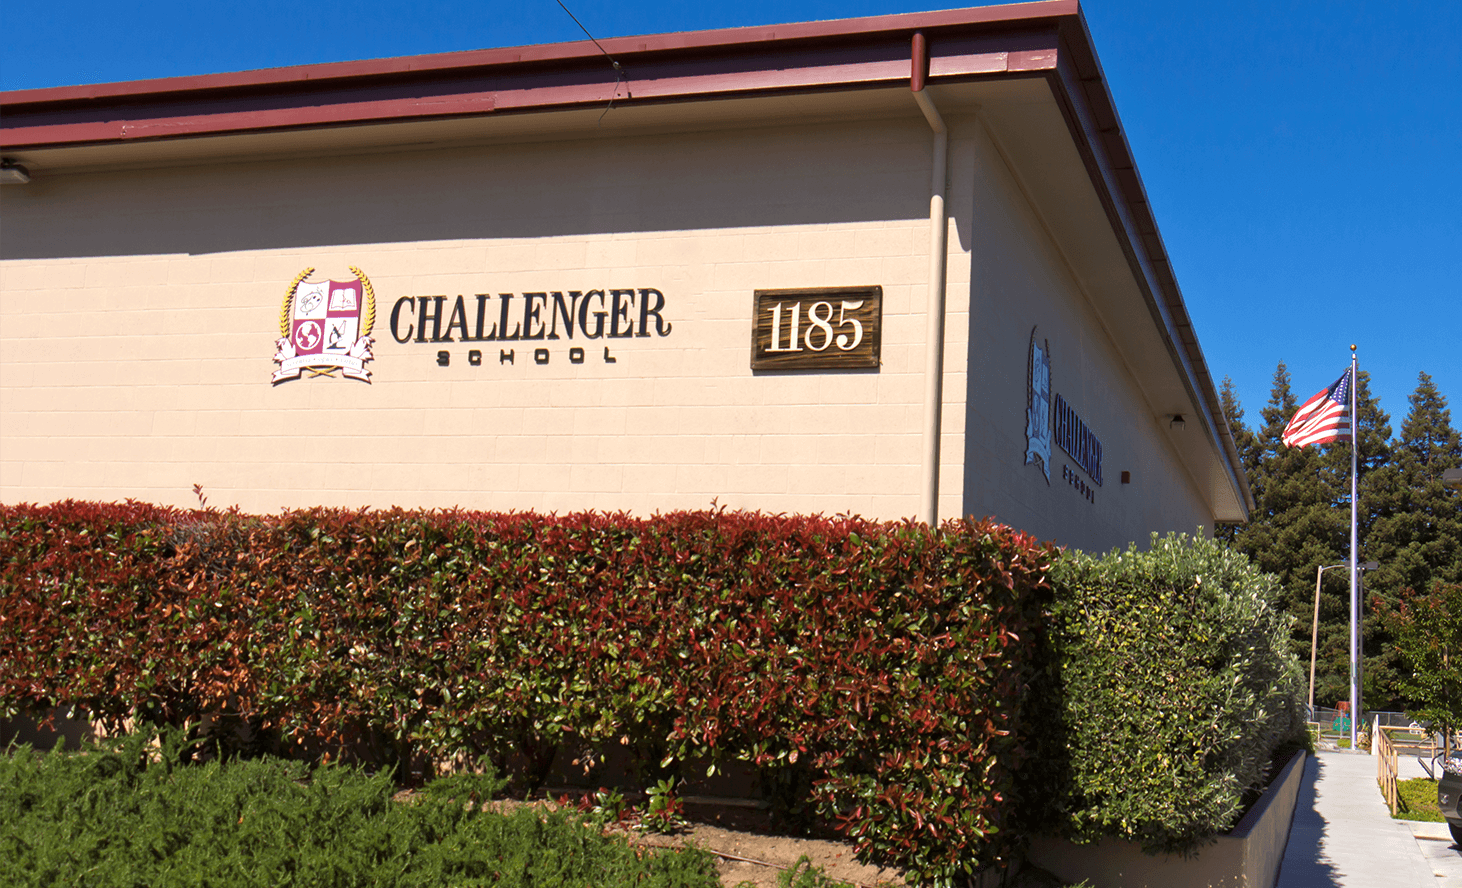 Building Front | Challenger School - Sunnyvale | Private School In Sunnyvale, California